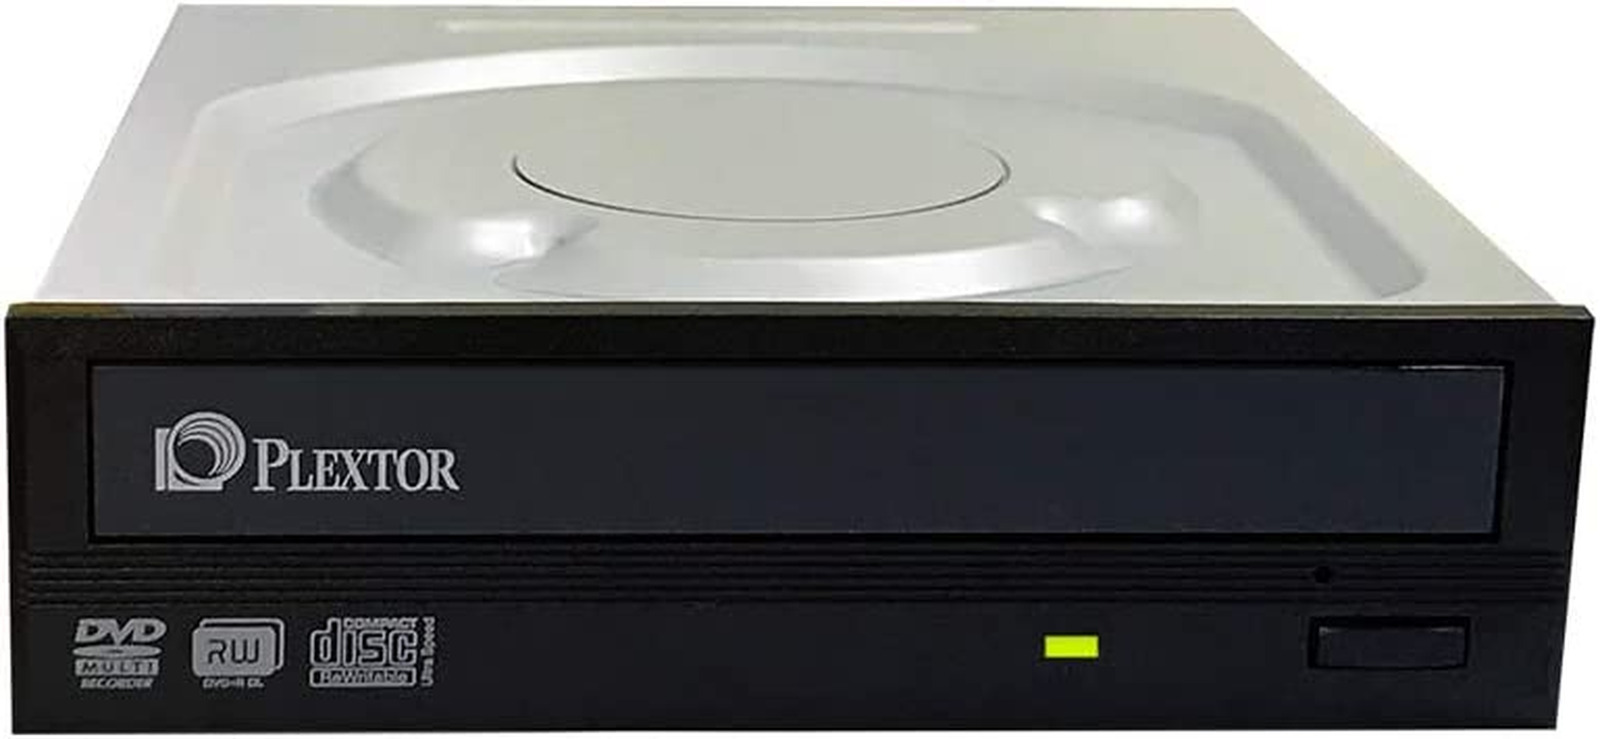 Plextor 24X SATA DVD/RW Dual Layer Burner Drive Writer - Black Optical Drives PX